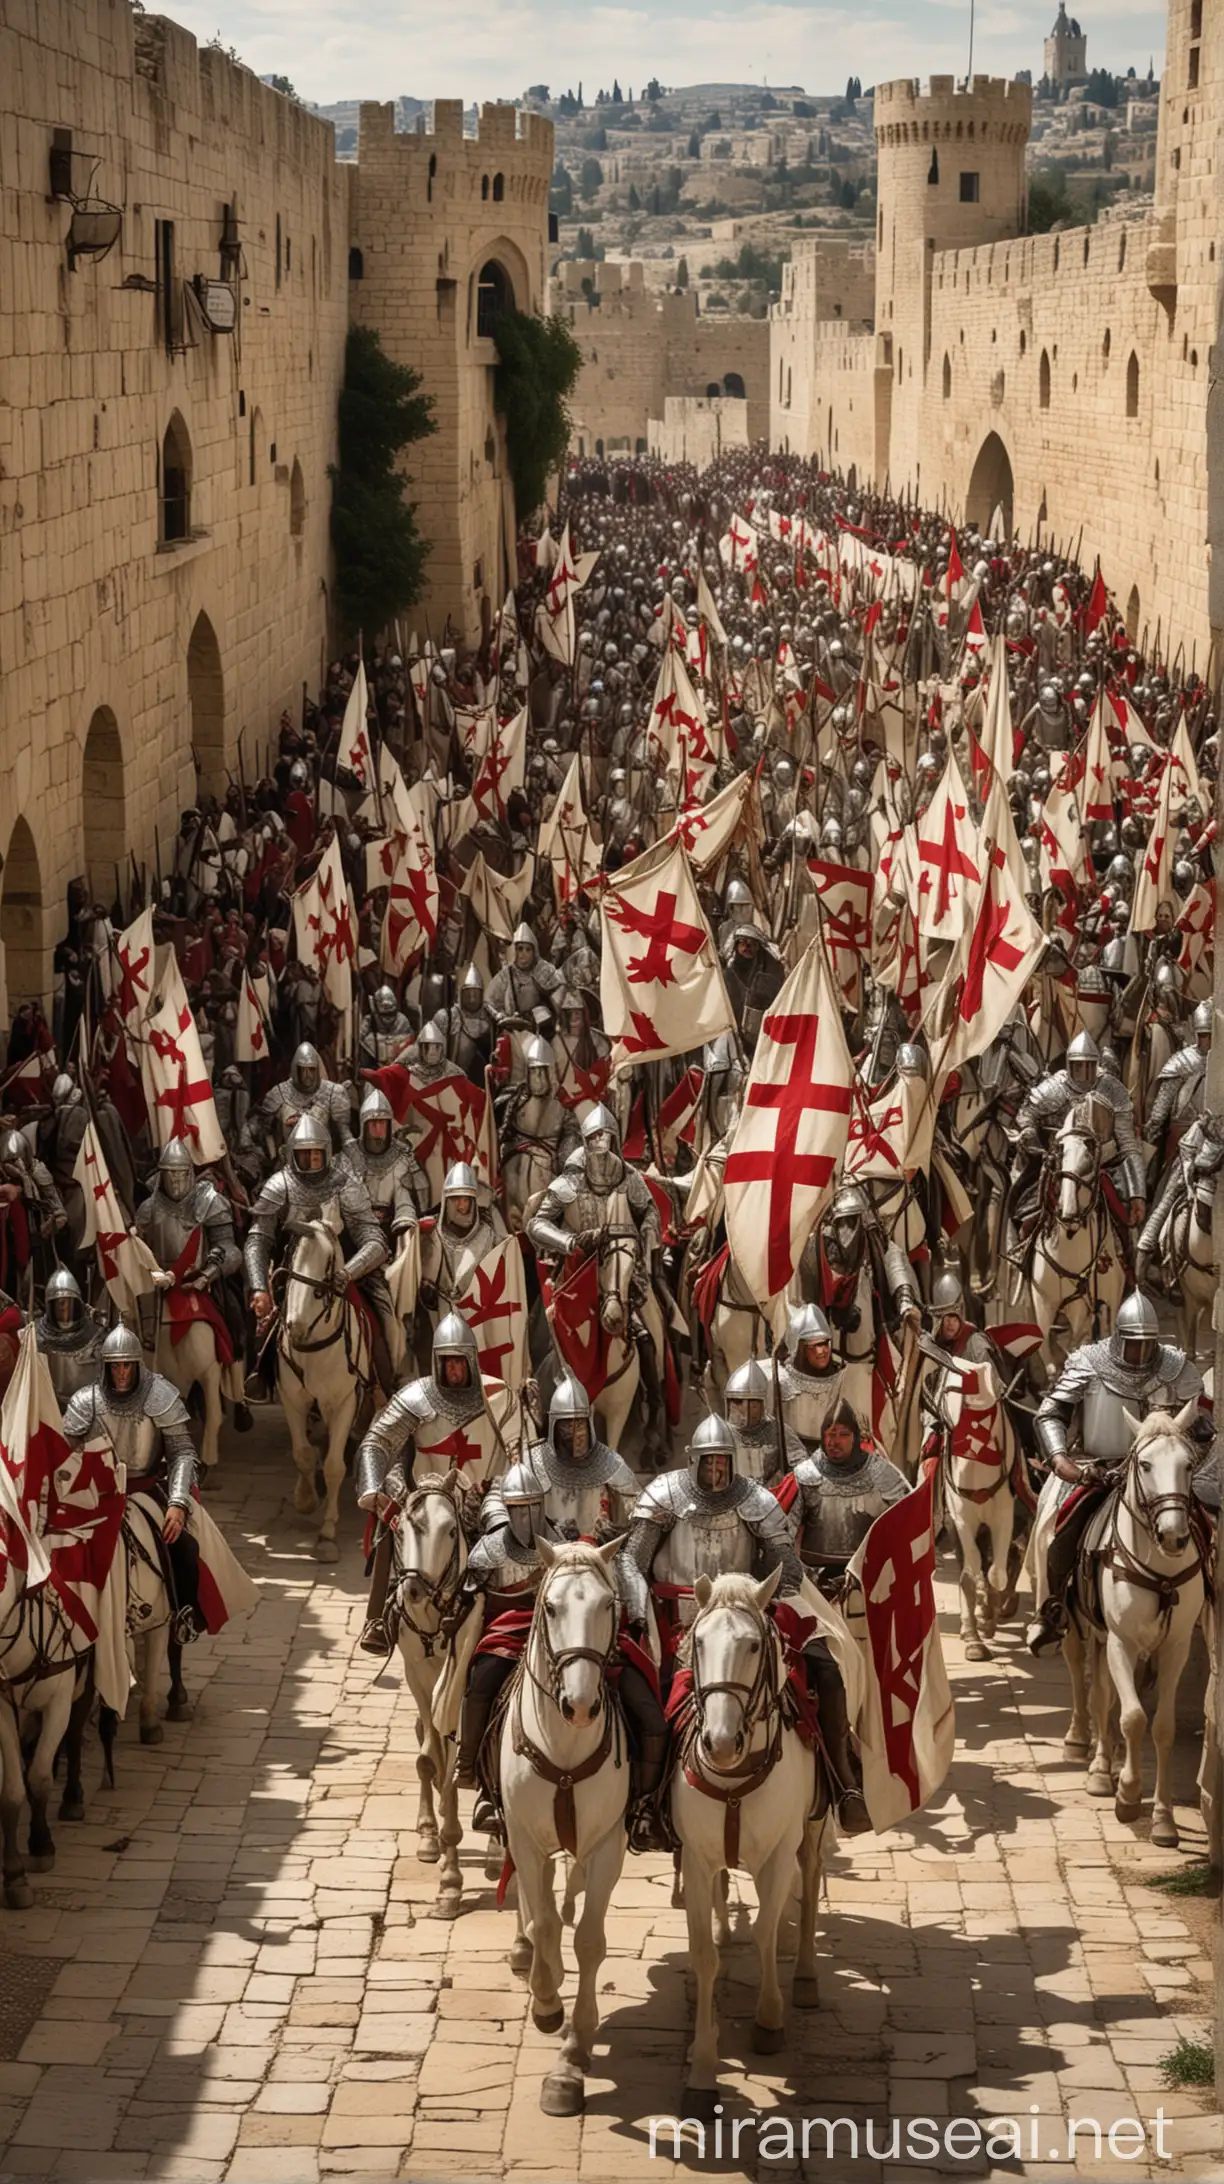 Knights Templar Crusaders Marching to Reclaim Jerusalem